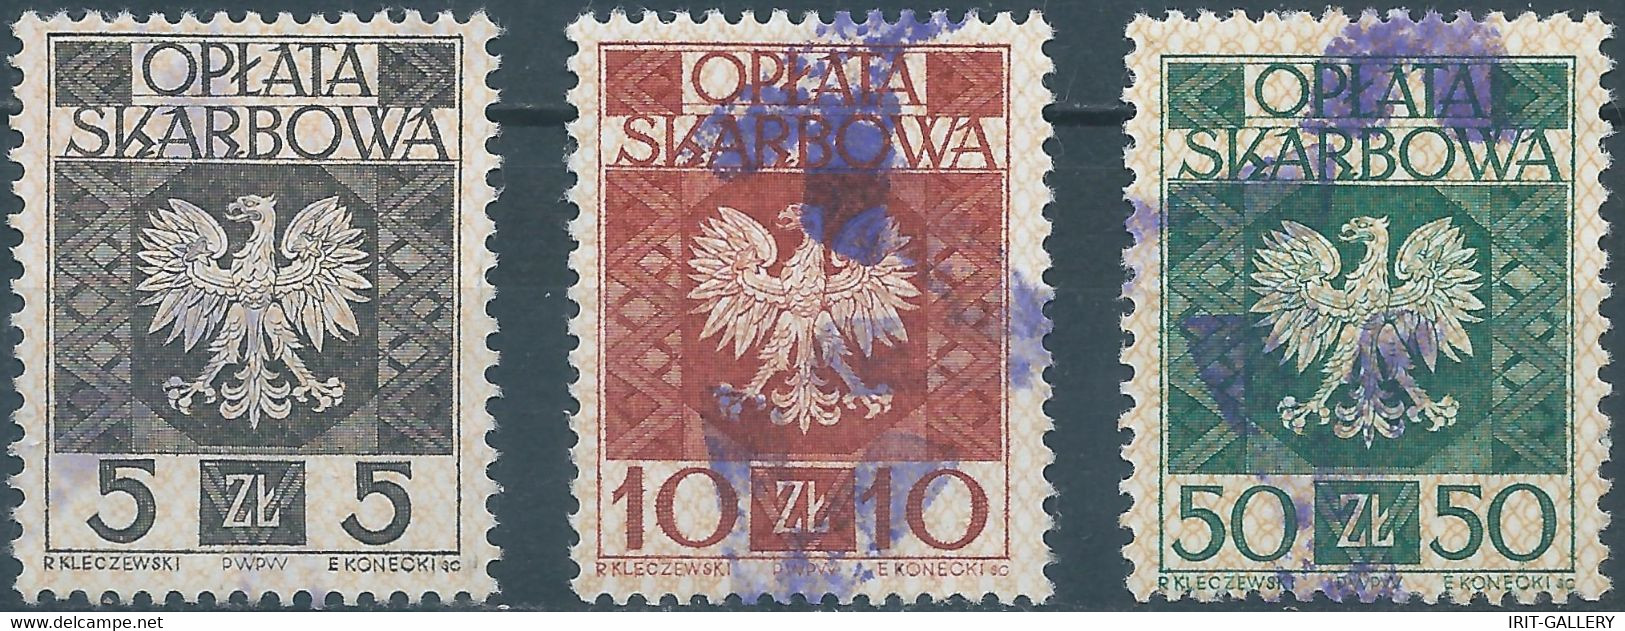 POLONIA-POLAND-POLSKA,1958 Revenue Stamp Fiscal TaX 5-10- 50ZL (OPLATA SKARBOWA) Used - Fiscaux